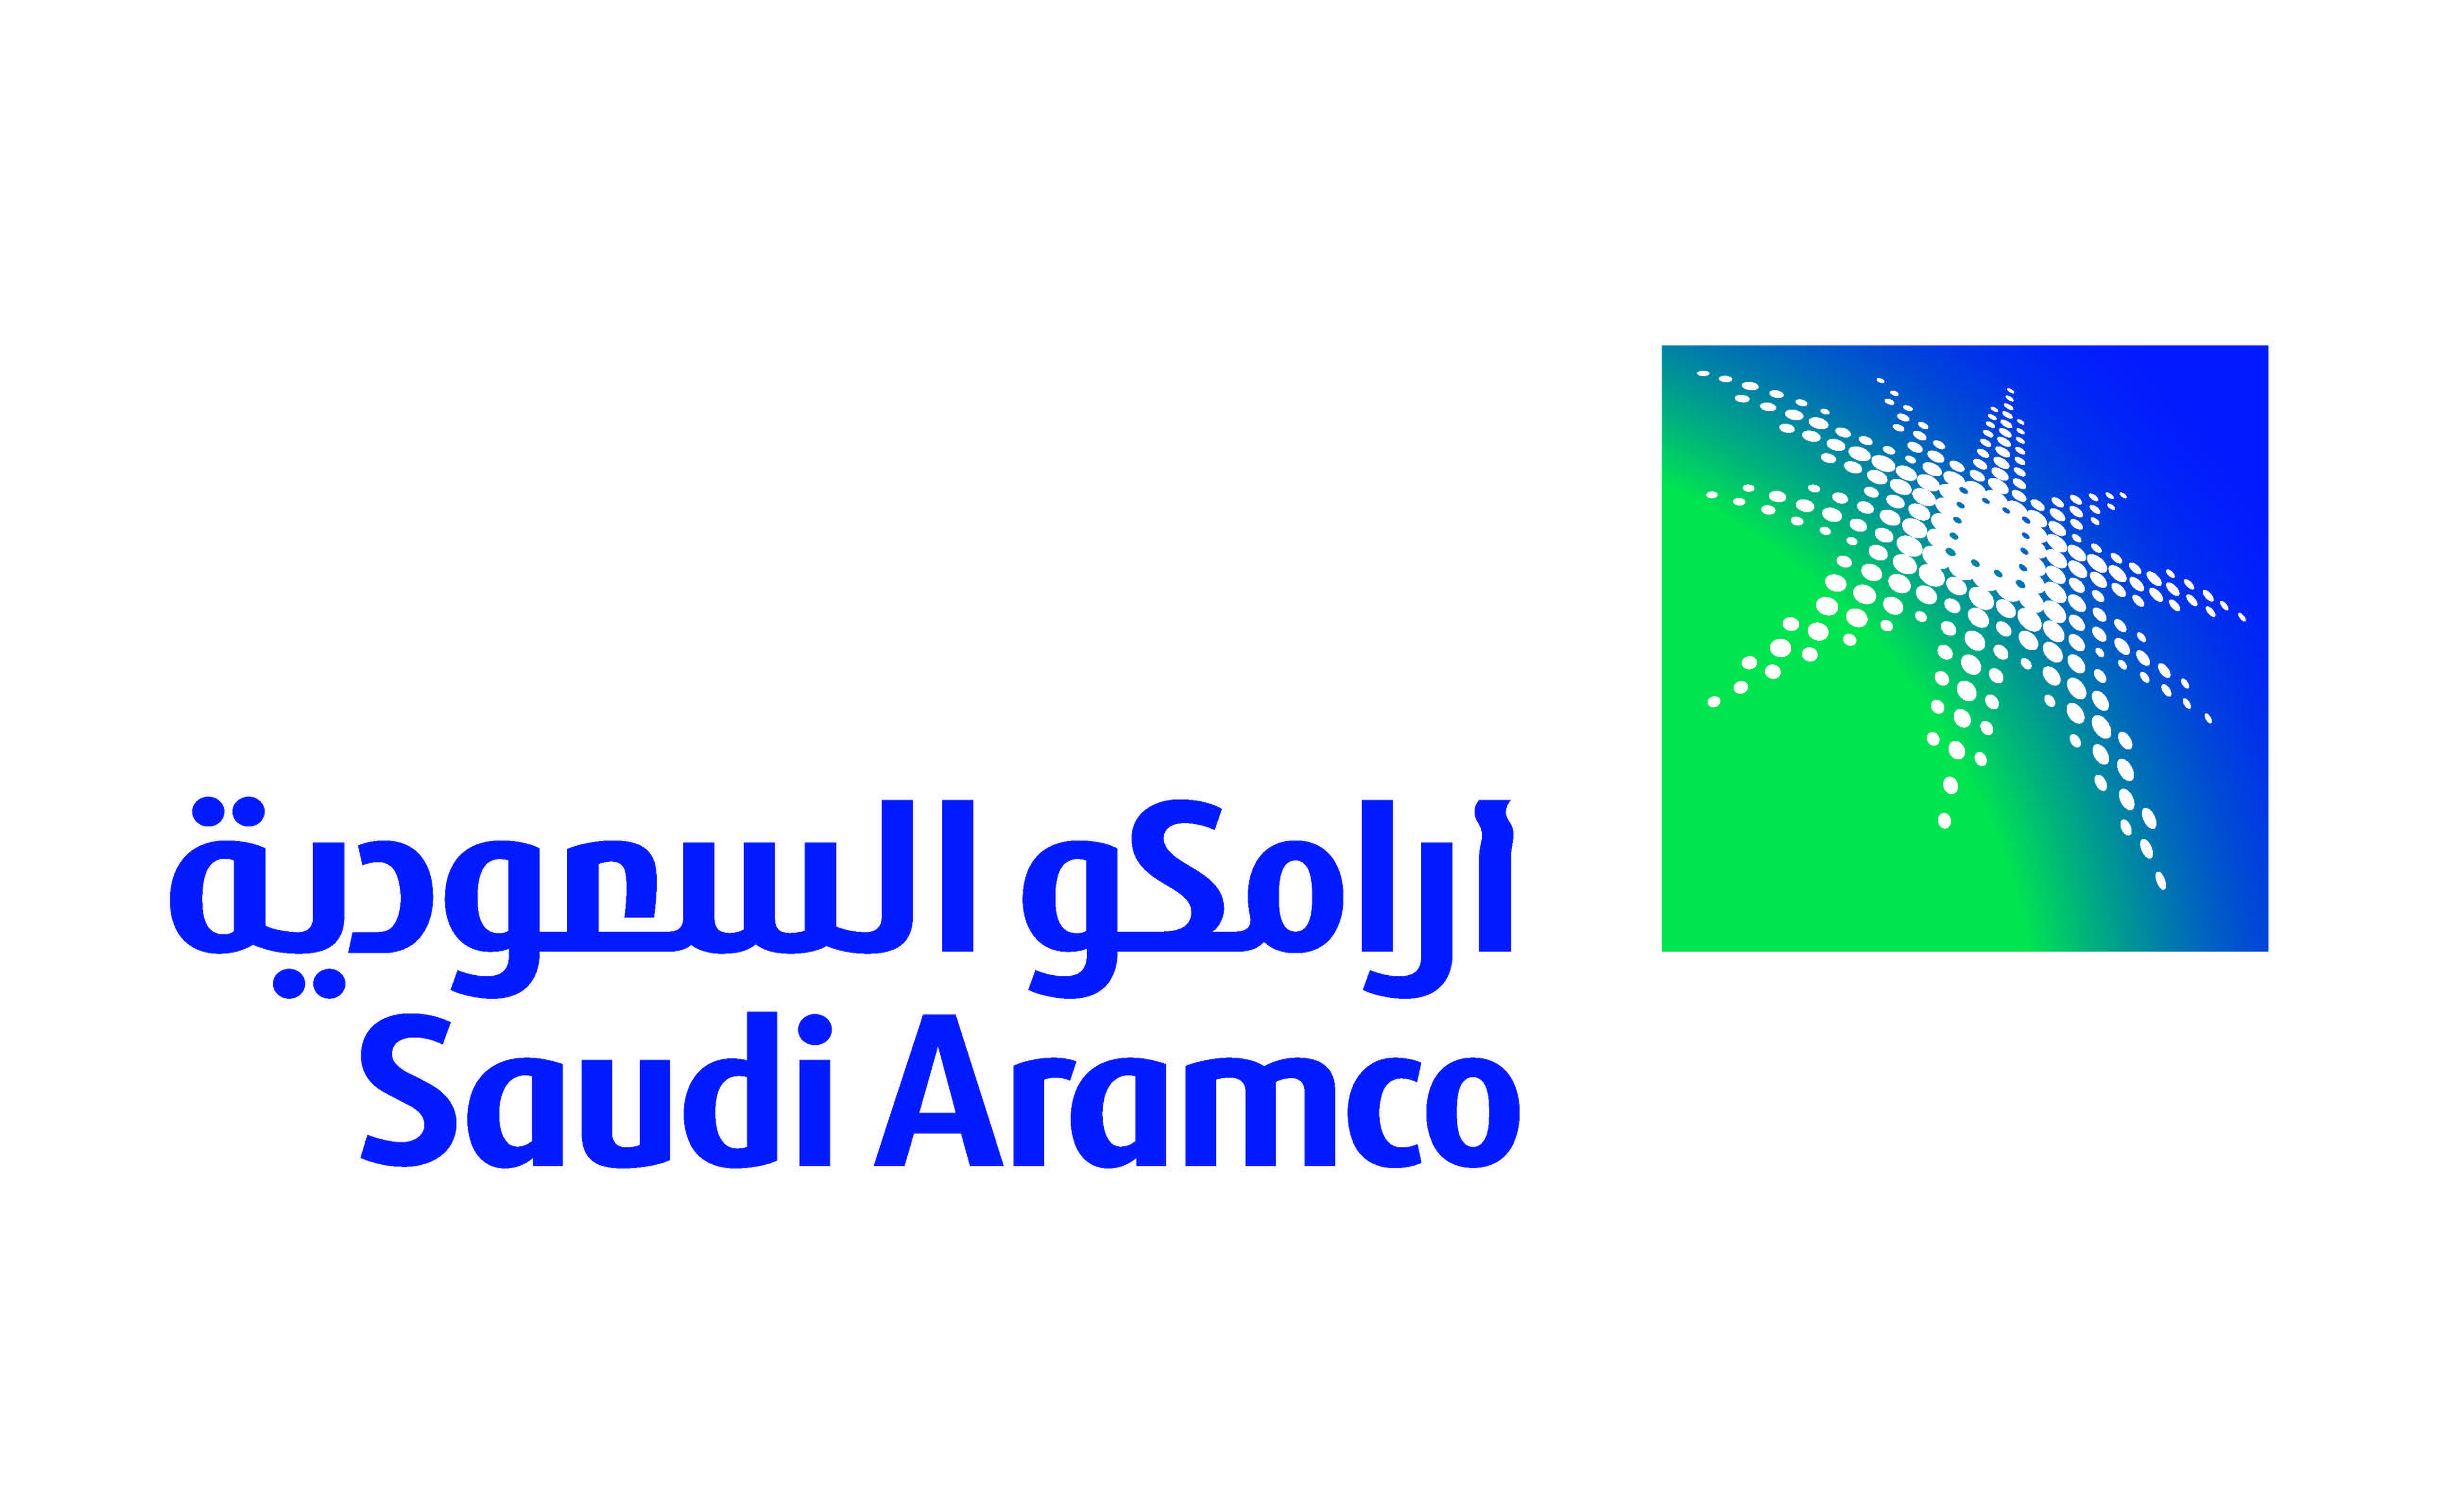 https://www.ranklogos.com/wp-content/uploads/2015/06/Saudi-Aramco-Logo.jpg